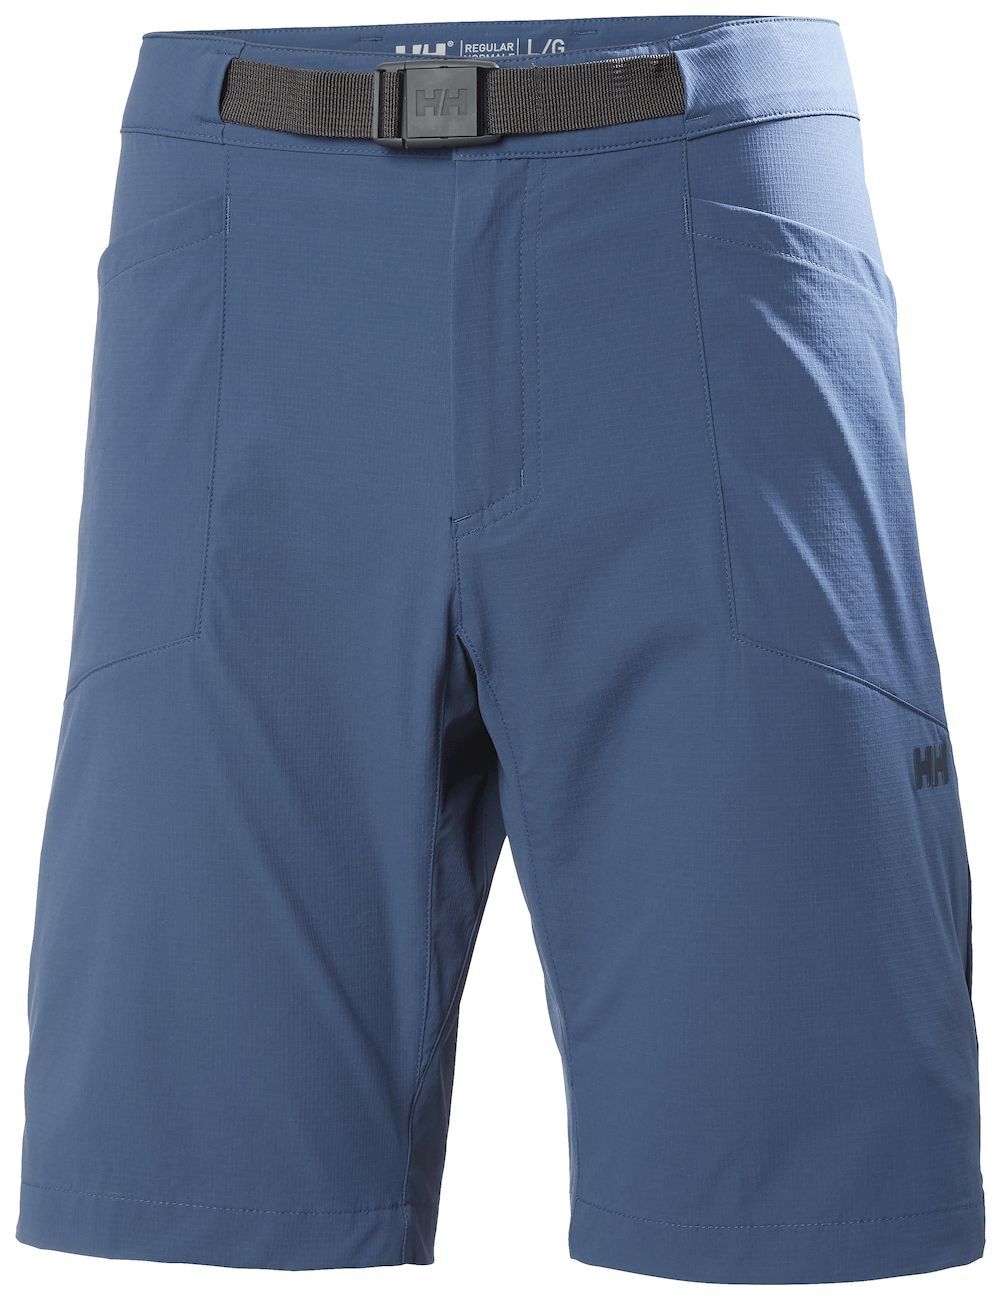 Helly Hansen Tinden Light Shorts - Walking shorts - Men's